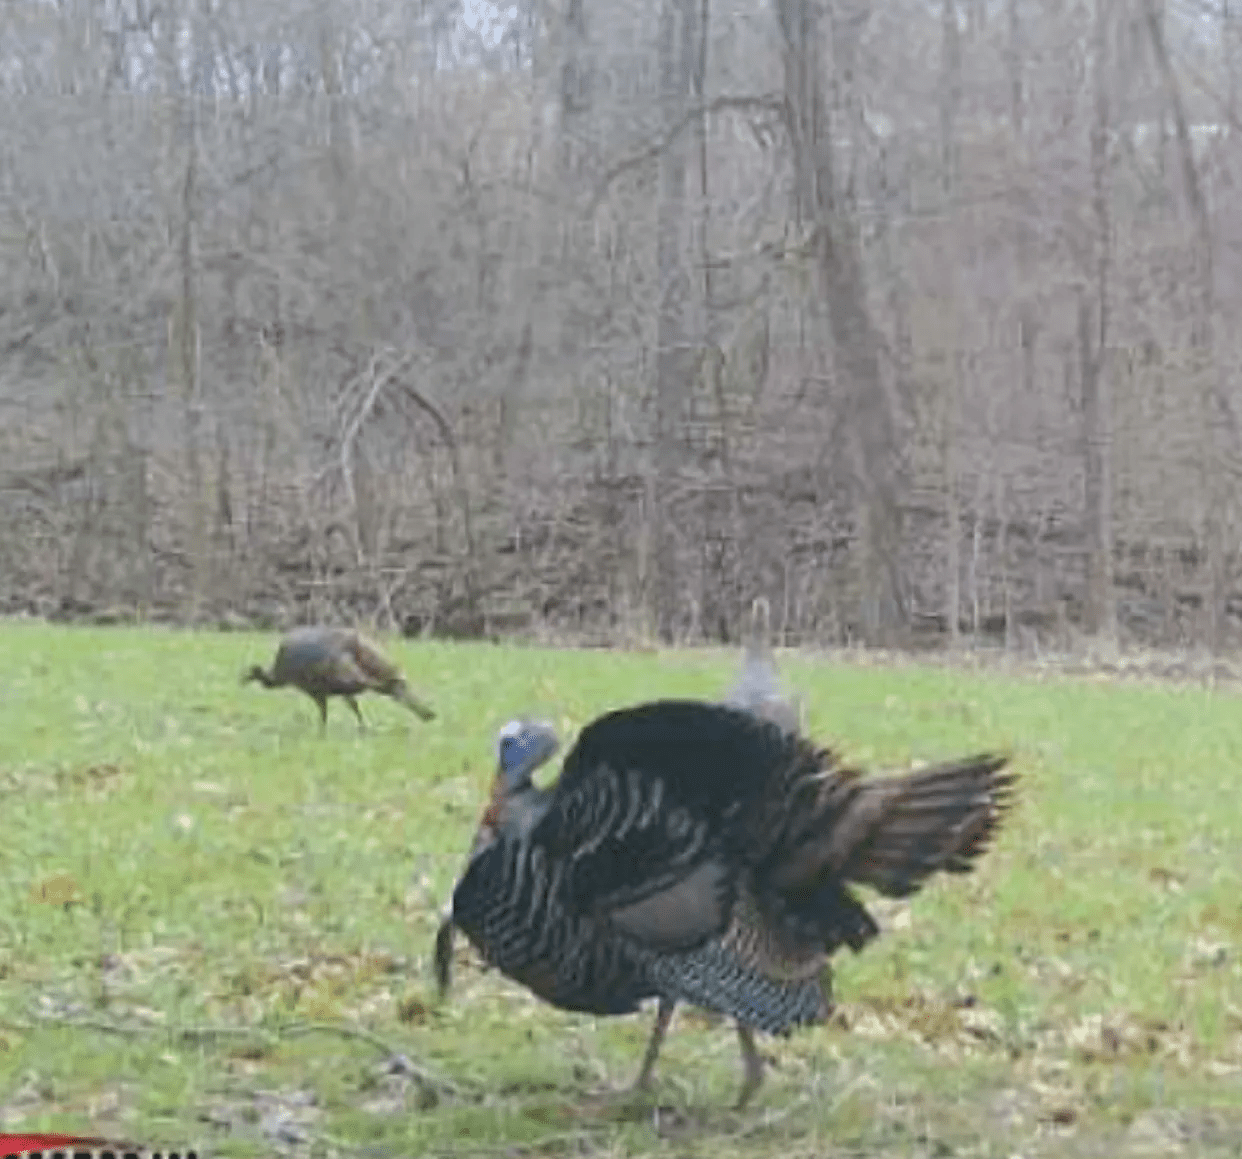 Two turkeys are standing in a field near trees.